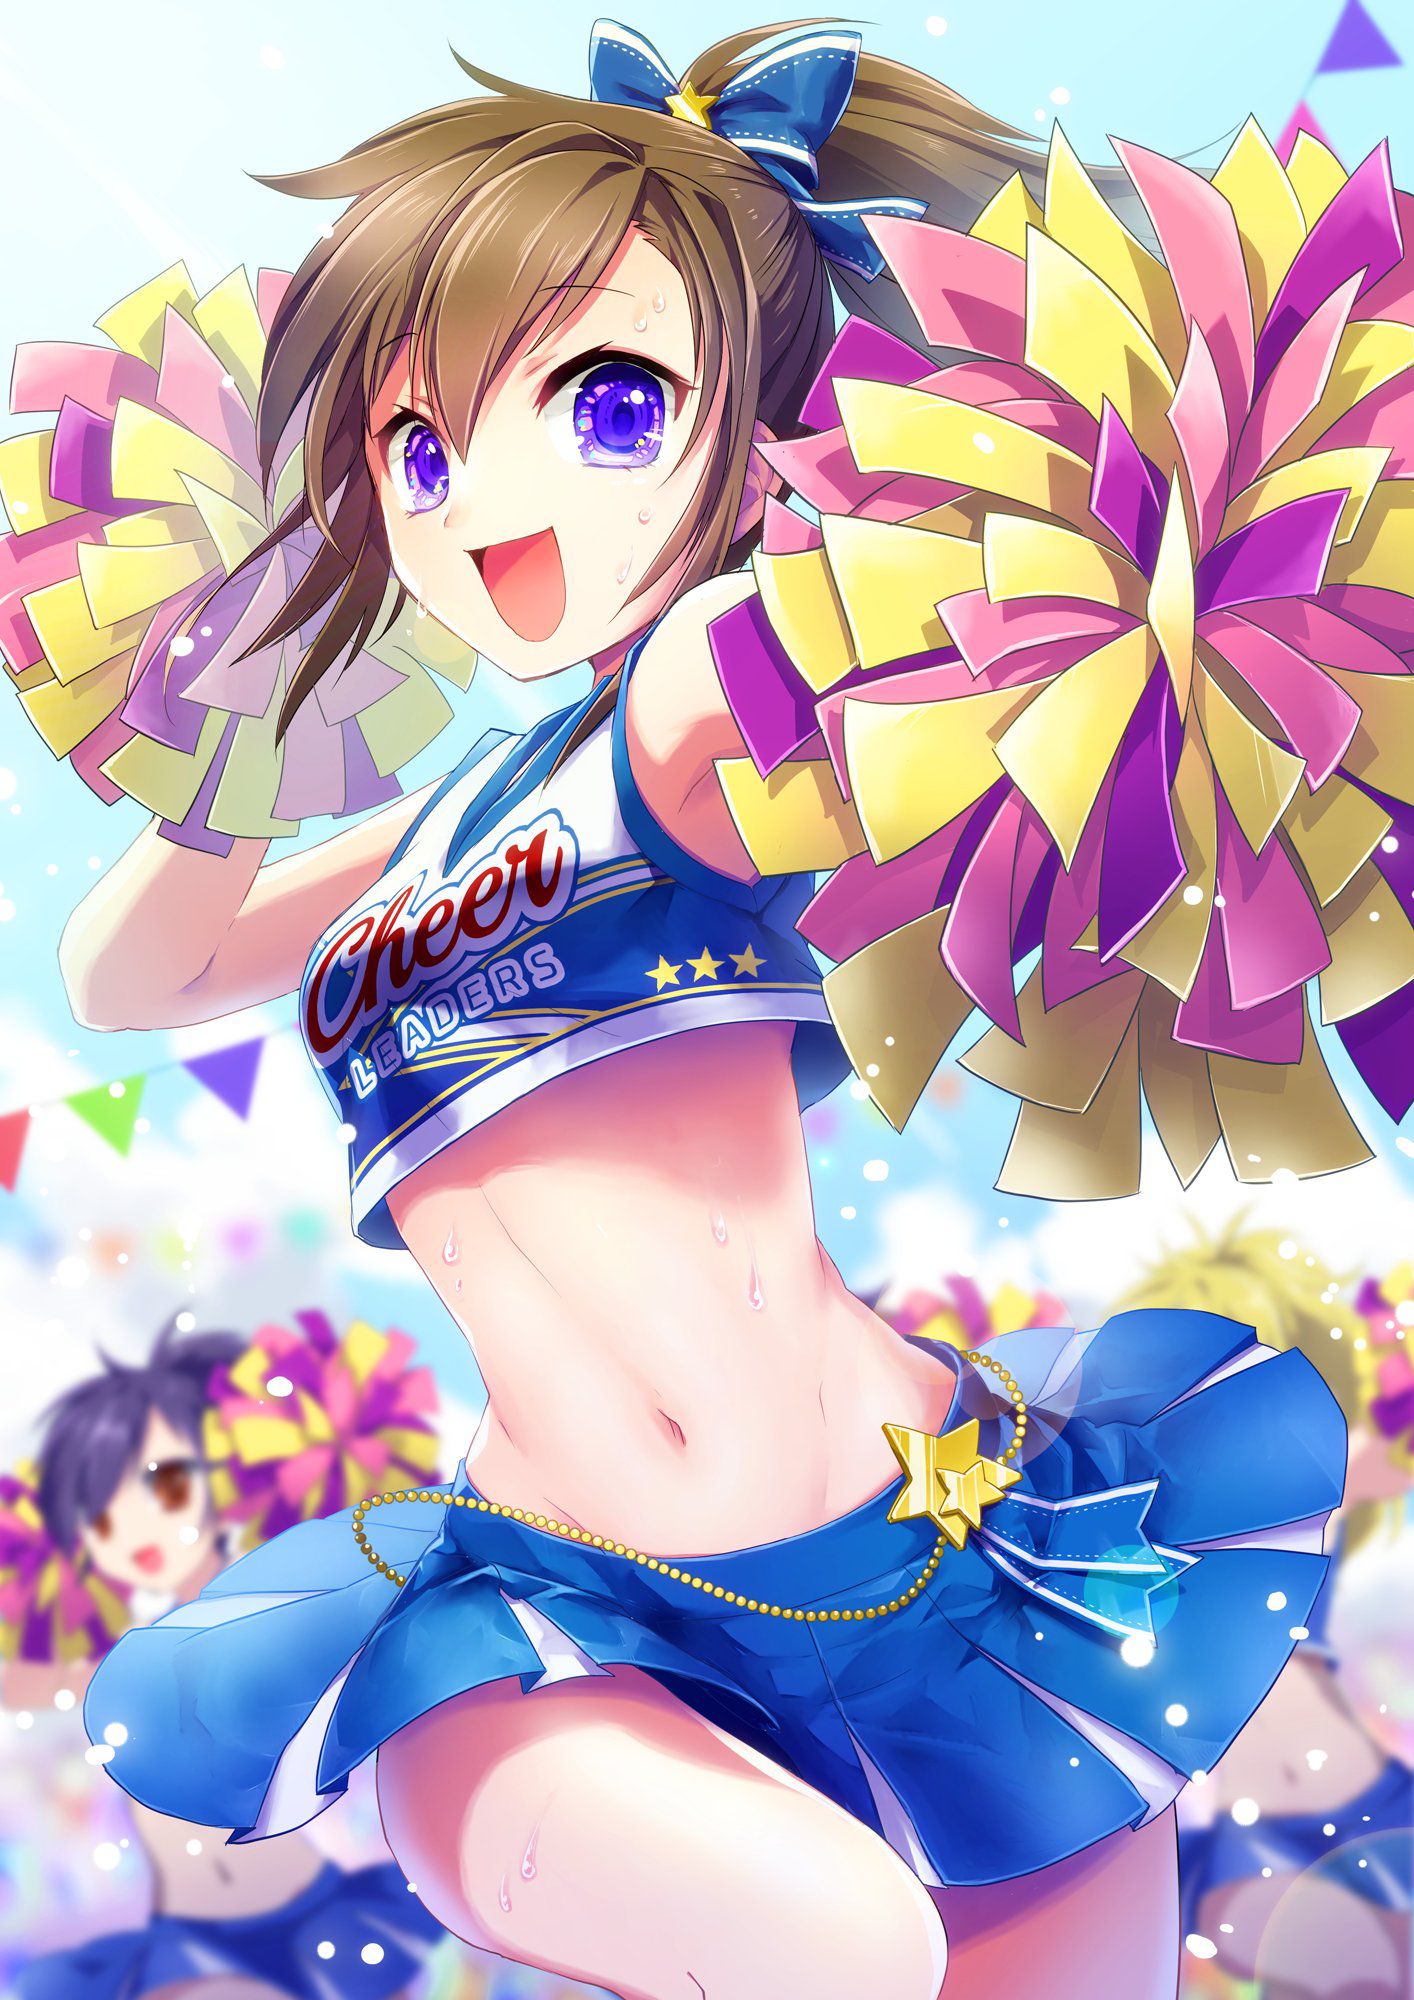 Erotic anime summary erotic image of echiechi girl in cheerleader appearance [secondary erotic] 6